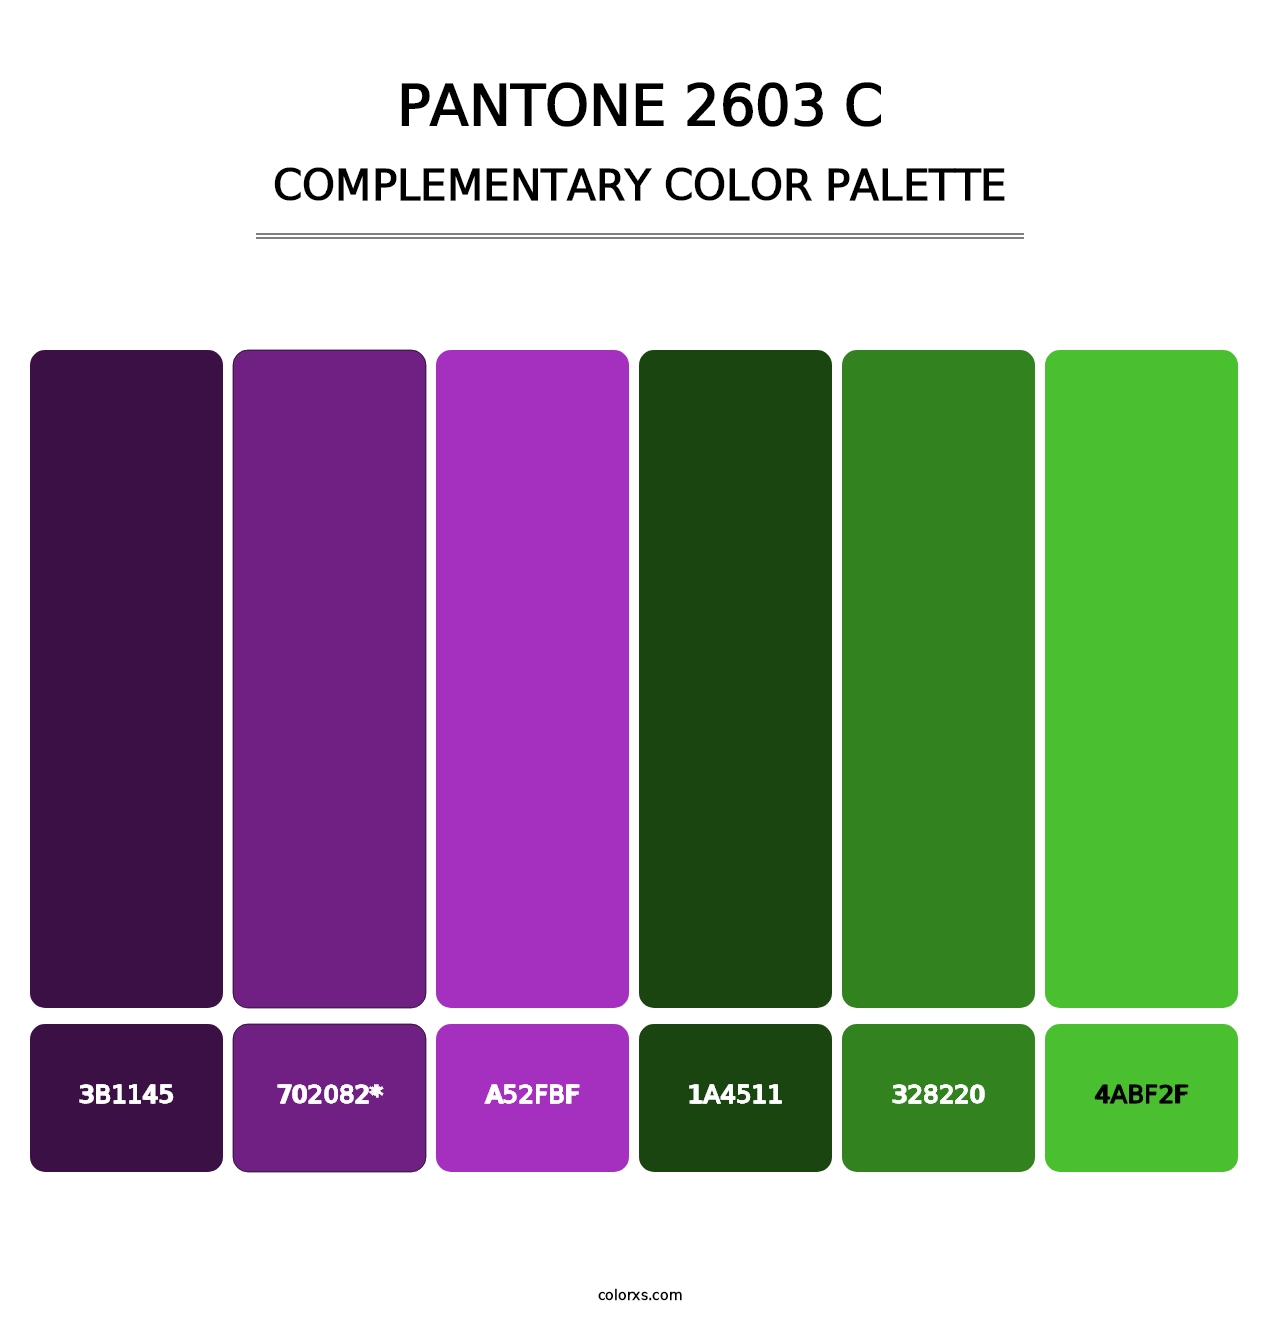 PANTONE 2603 C - Complementary Color Palette